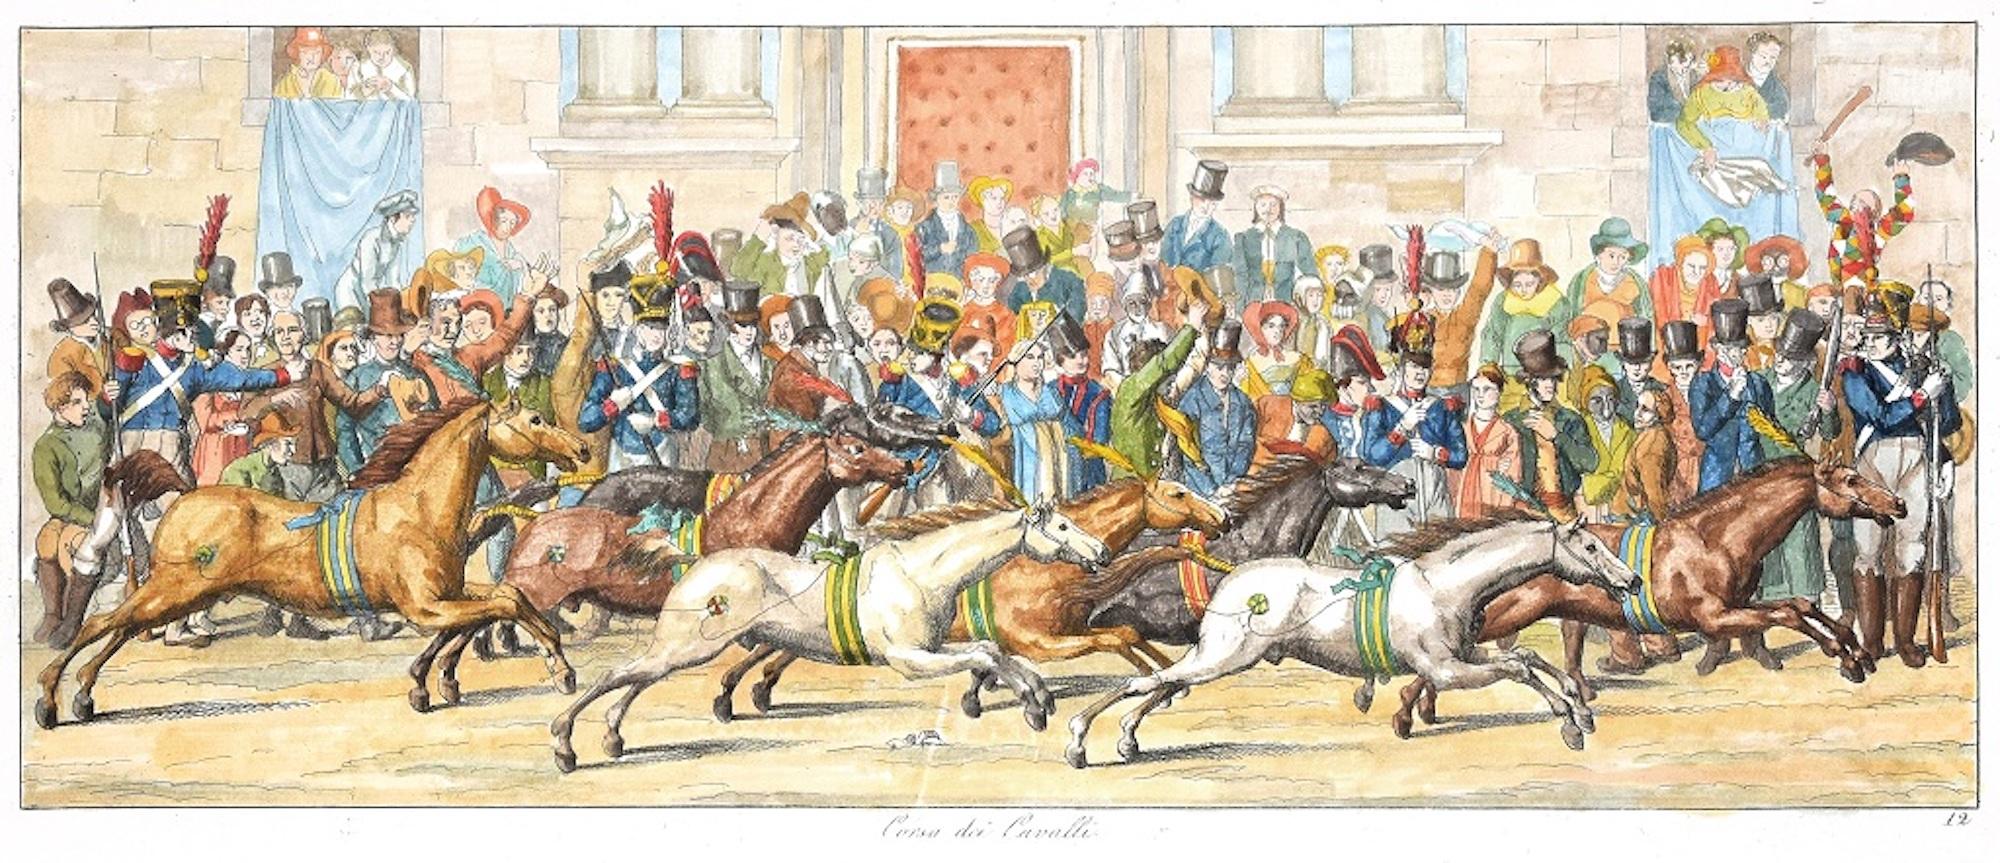 Eau-forte originale de la course de chevaux par C. G. Hyalmar Morner - 1820 - Print de Carl Gustaf Hyalmar Morner